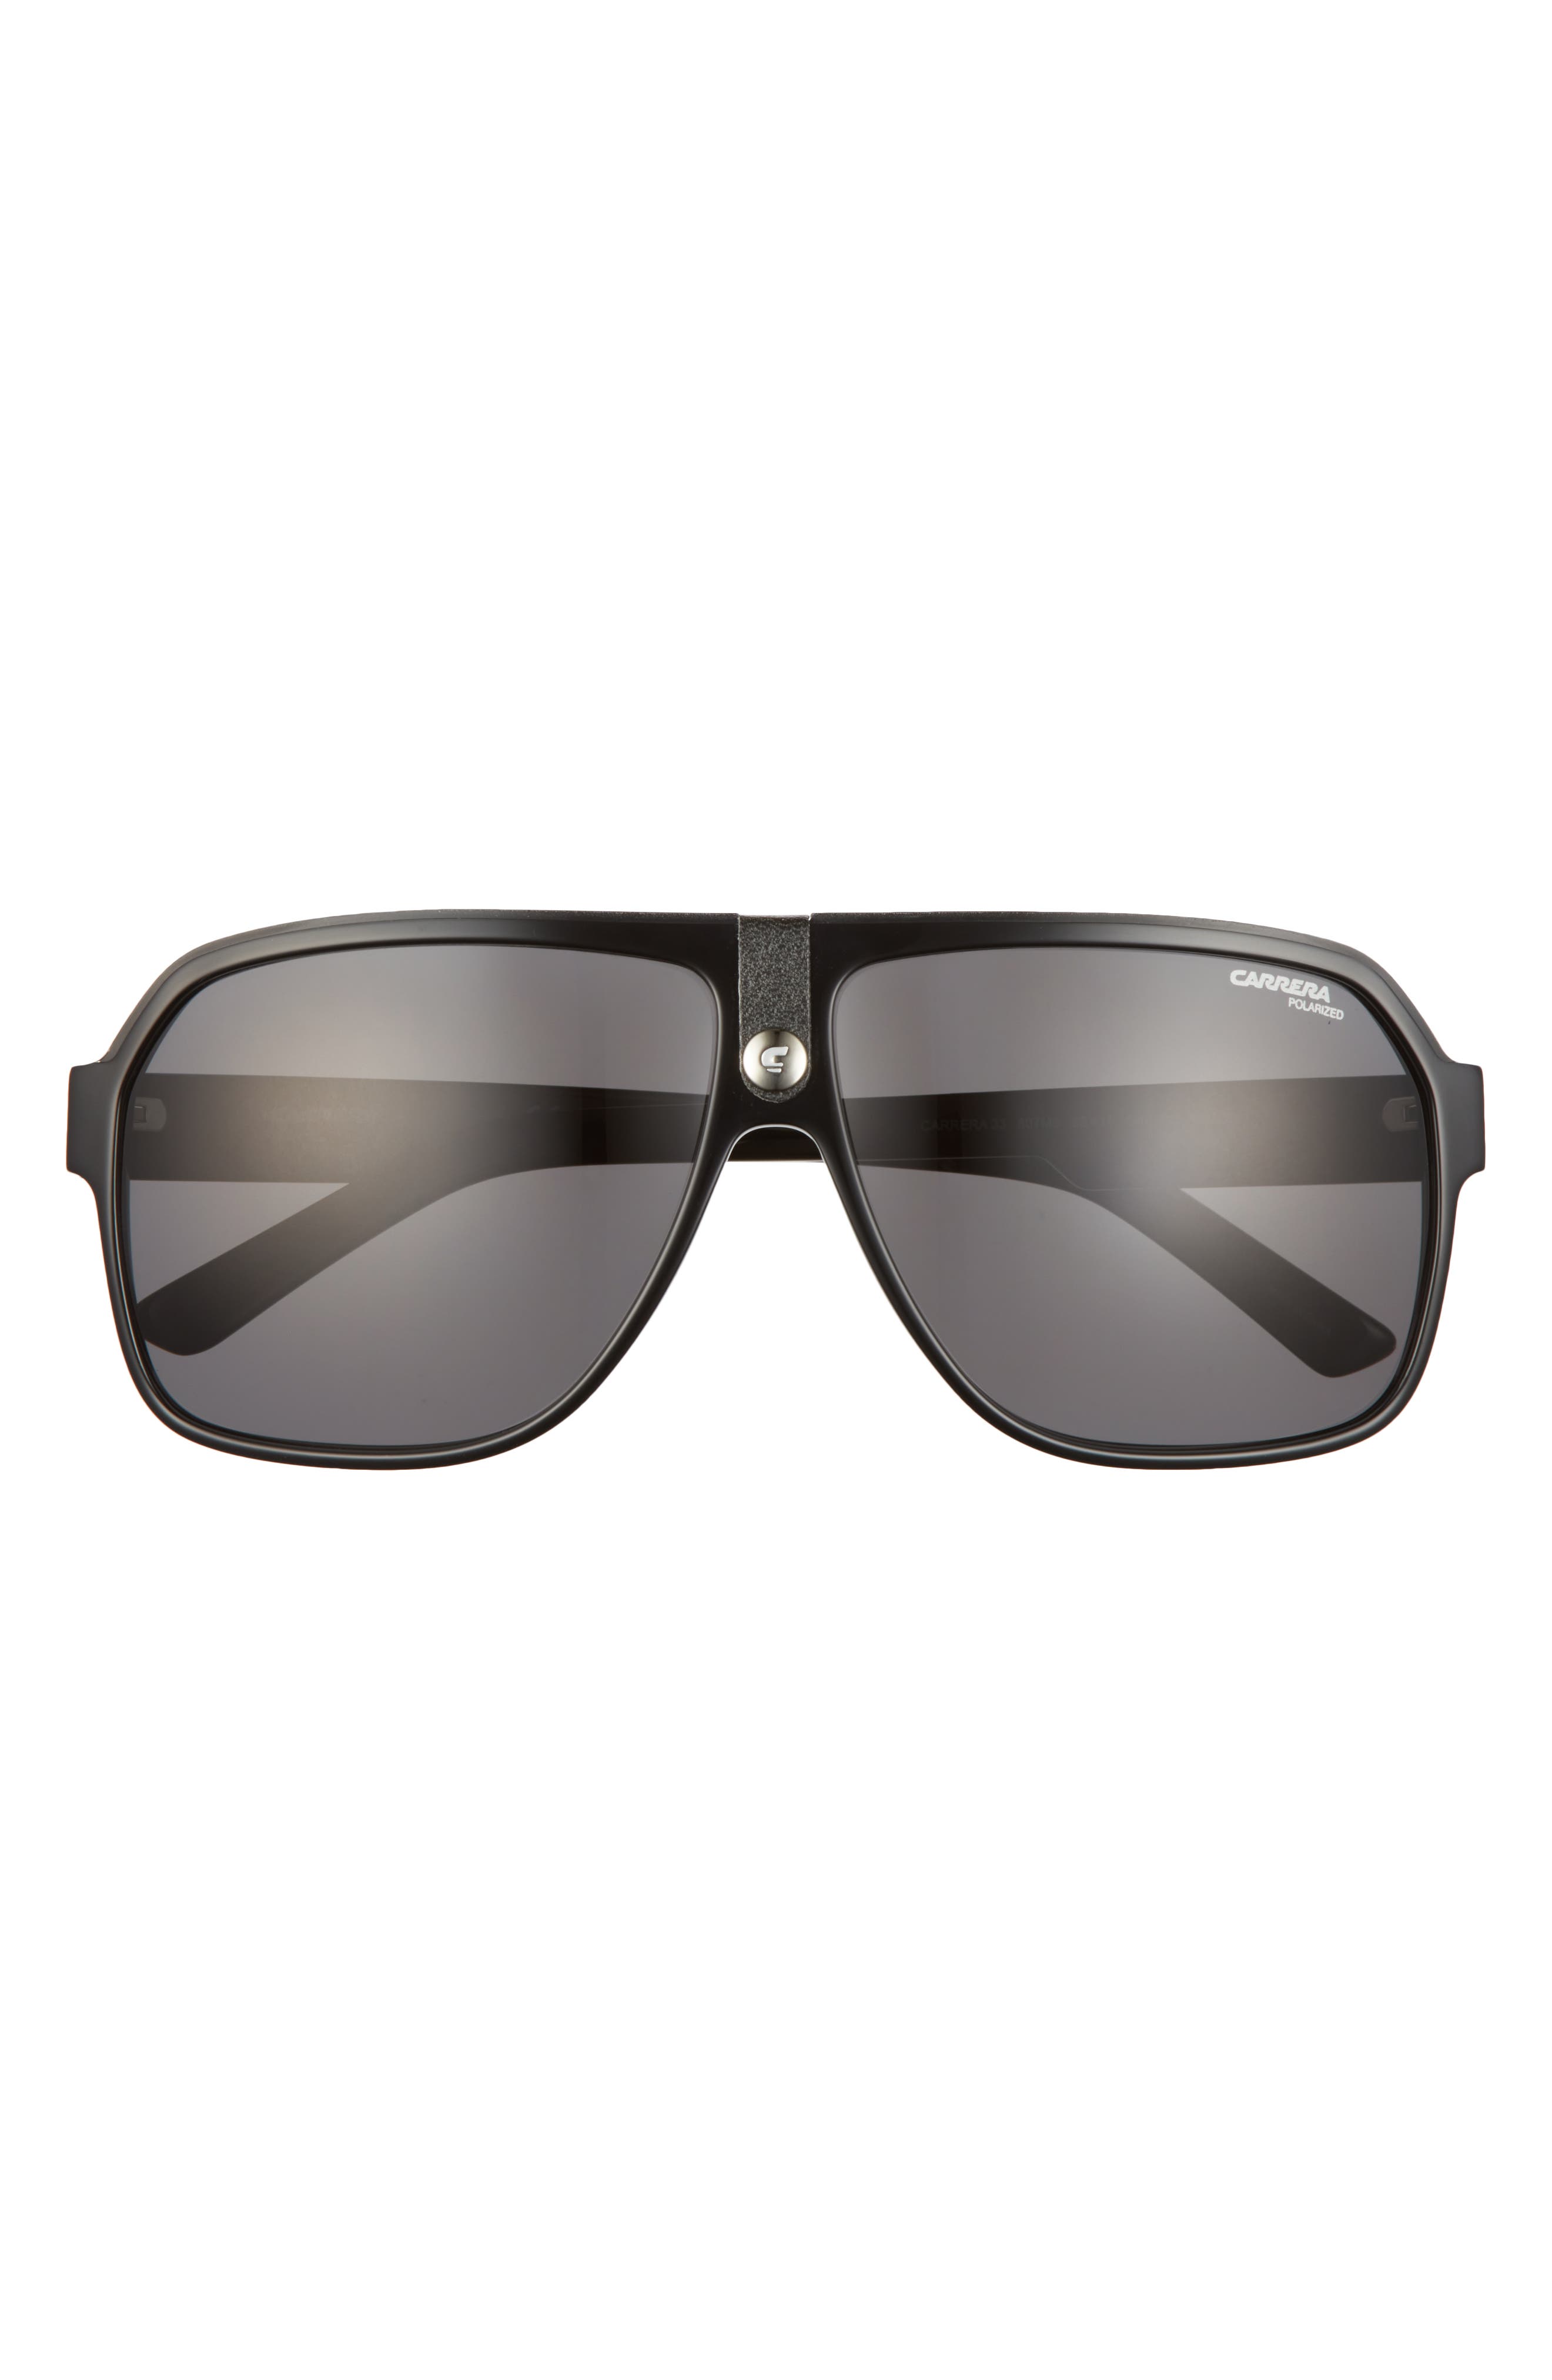 CARRERA Oversized Aviator Sunglasses Men's Women Square Sports Glasses with Case